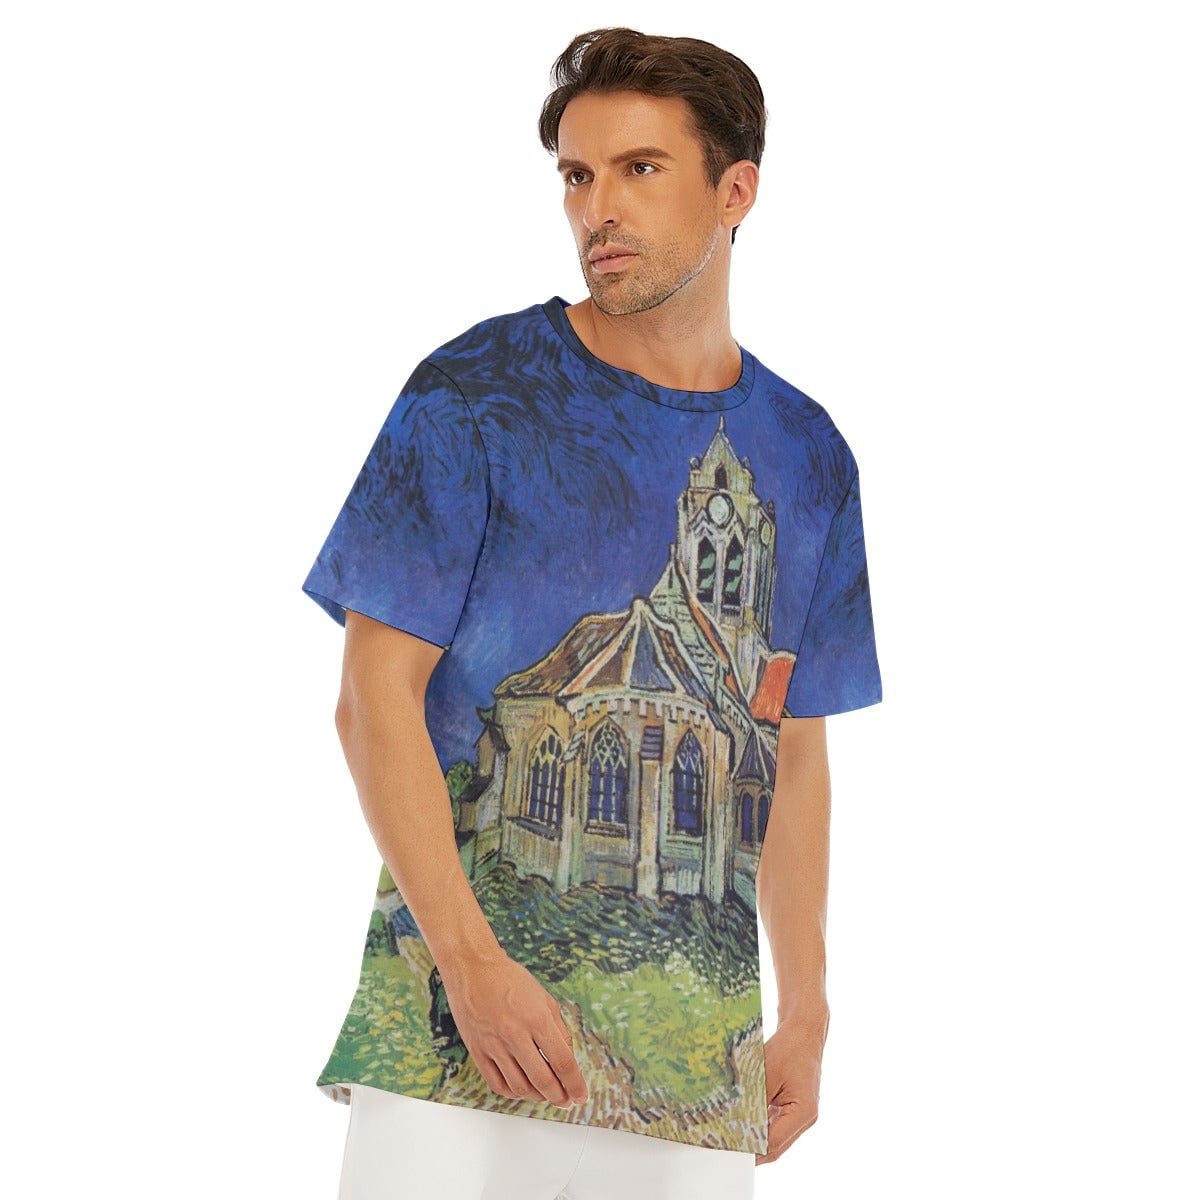 Vincent van Gogh’s The Church at Auvers T-Shirt